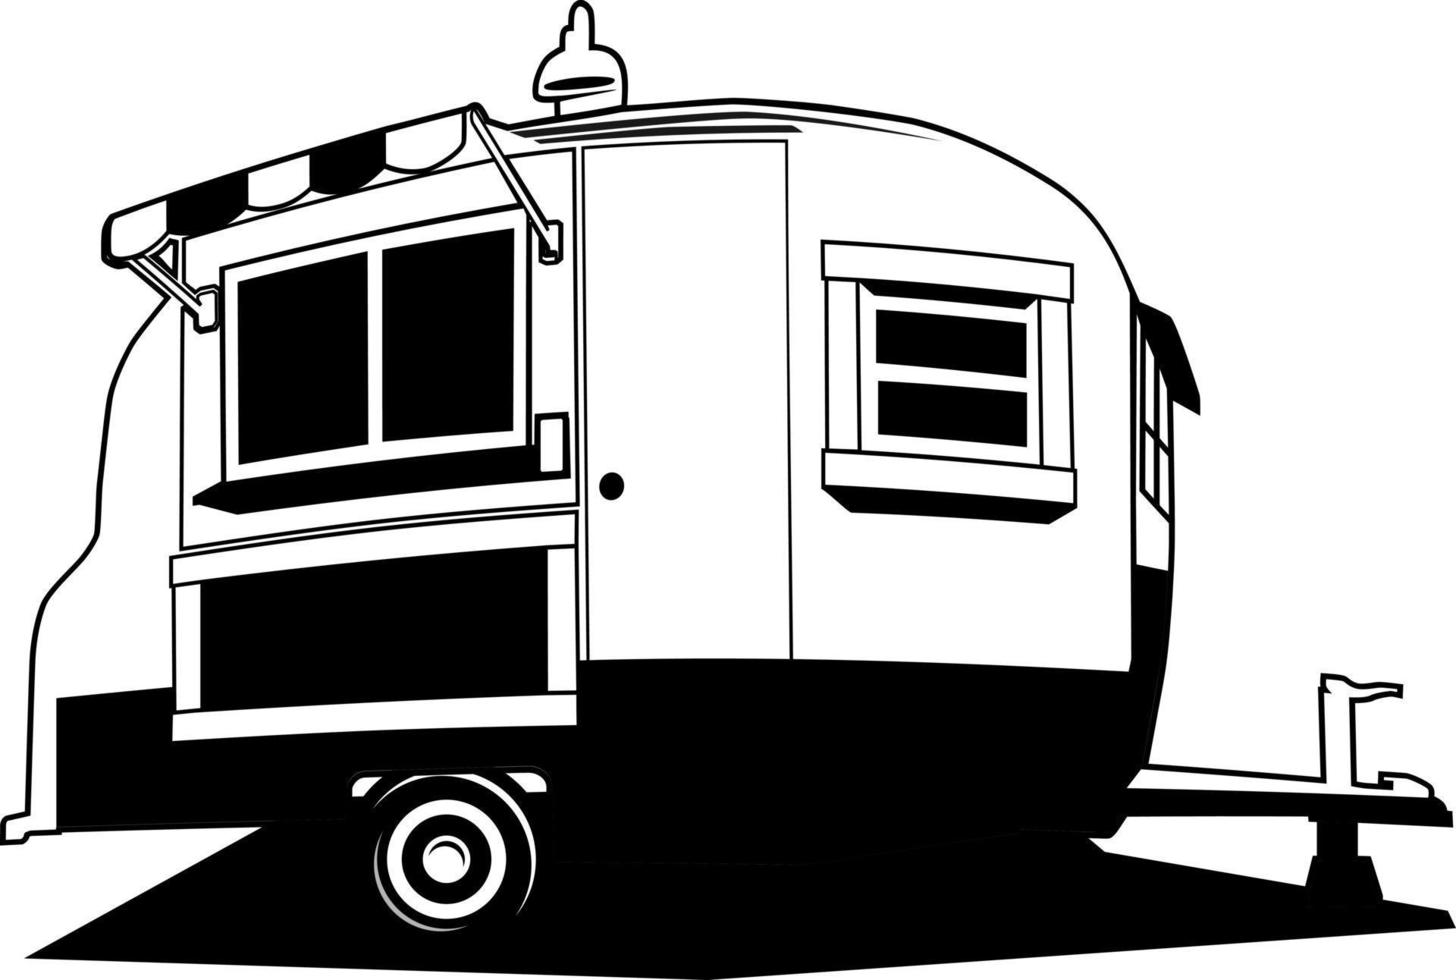 caravan design logo icon vector